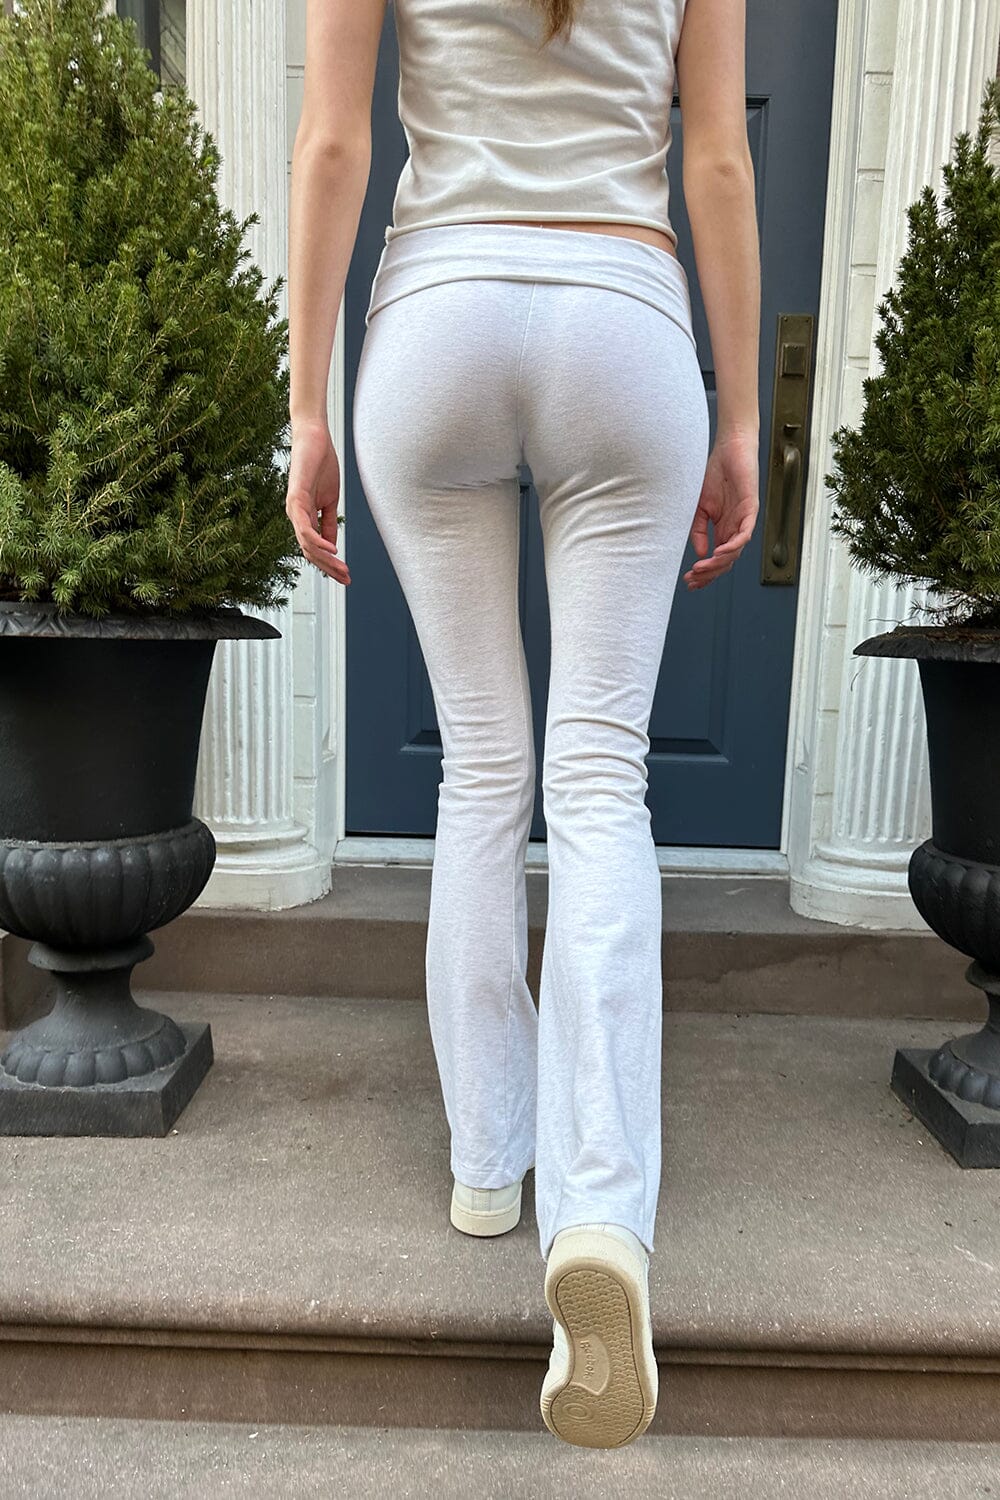 Brandy Melville Heather Gray Yoga Pants Leggings Size Small